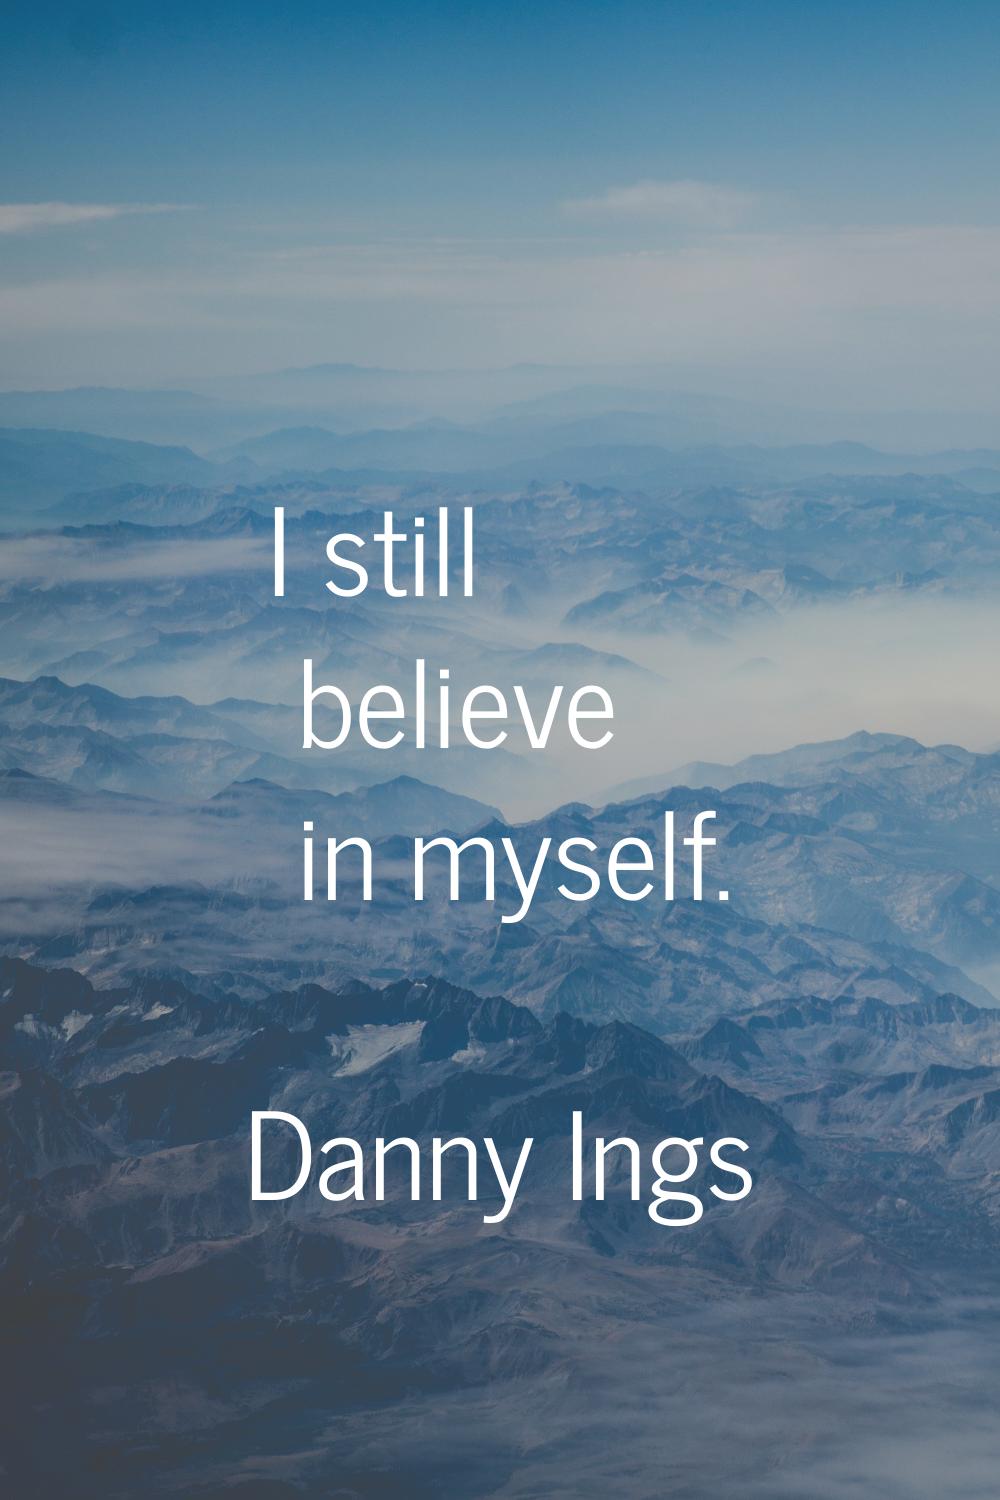 I still believe in myself.